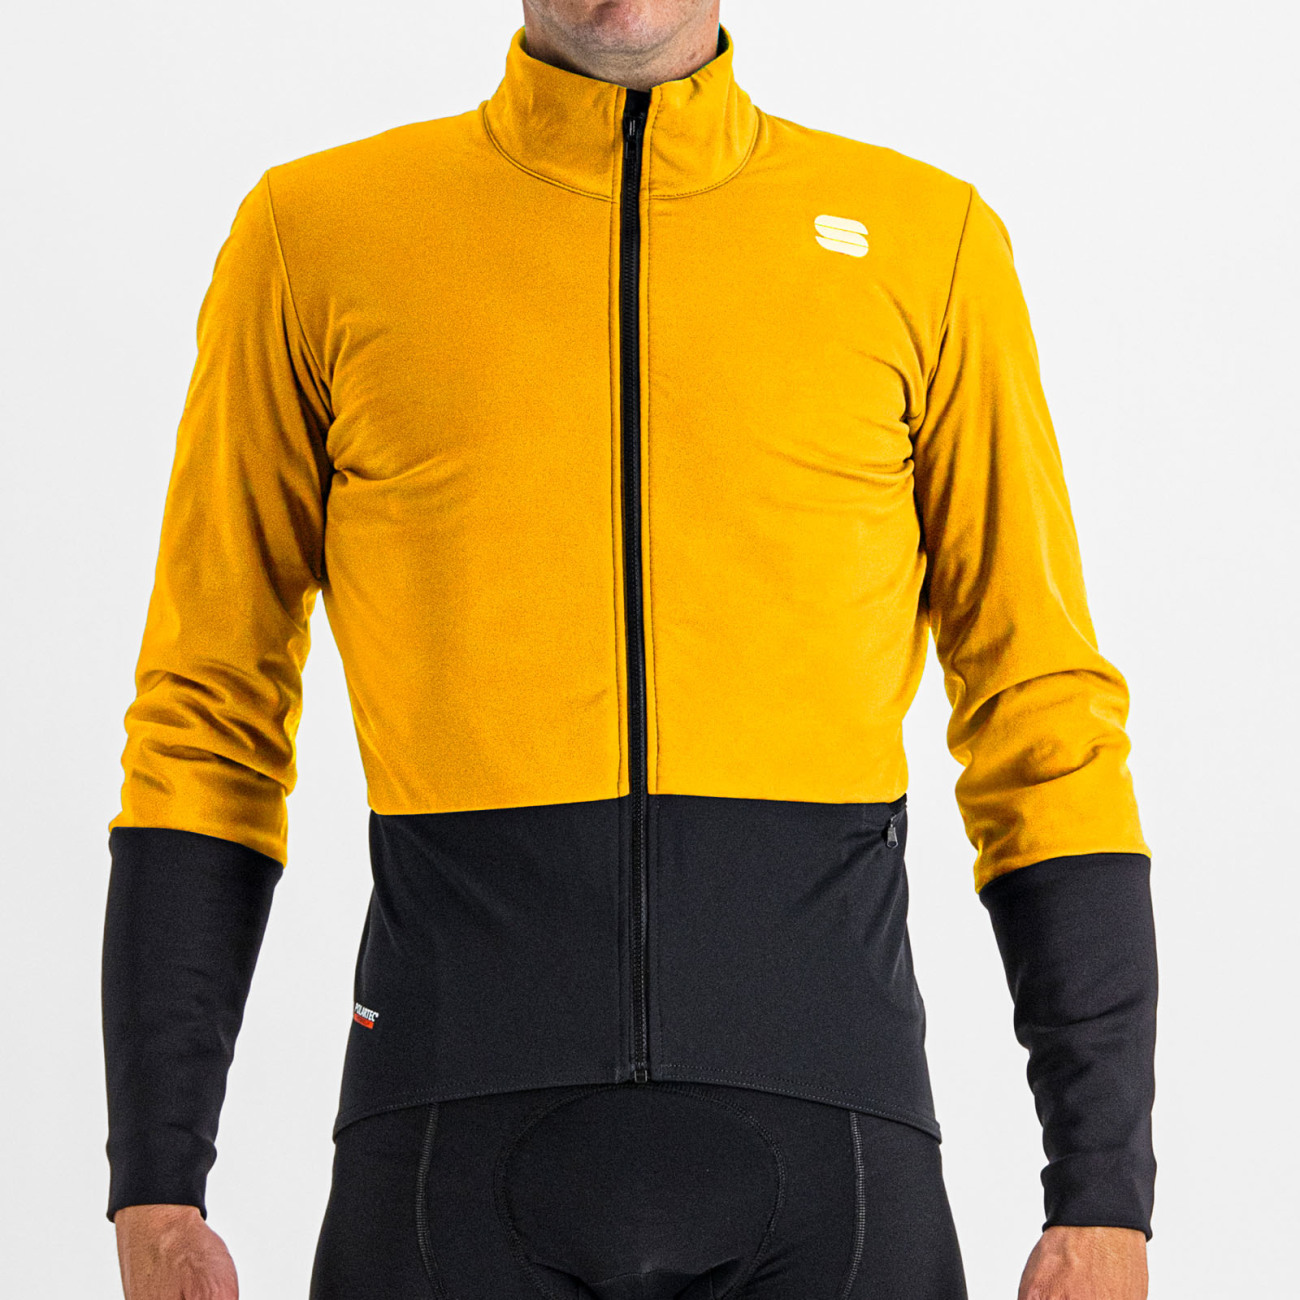 
                SPORTFUL Cyklistická větruodolná bunda - TOTAL COMFORT - žlutá/černá XL
            